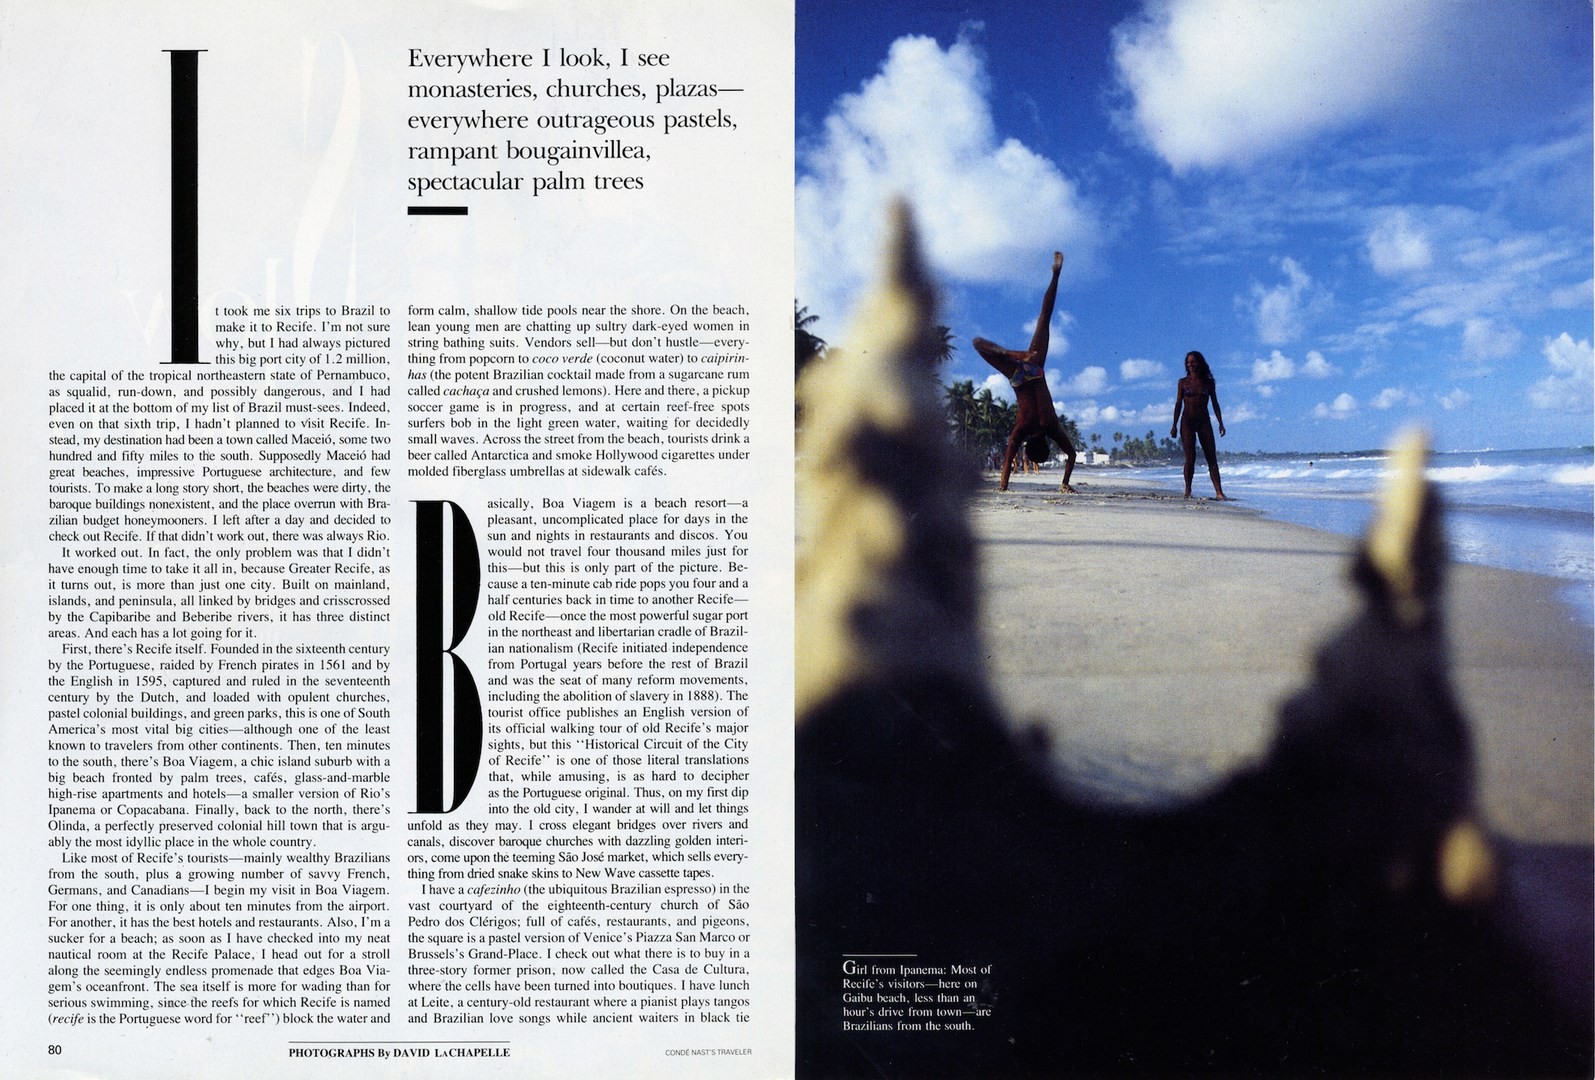 David LaChapelle | Traveler | 34